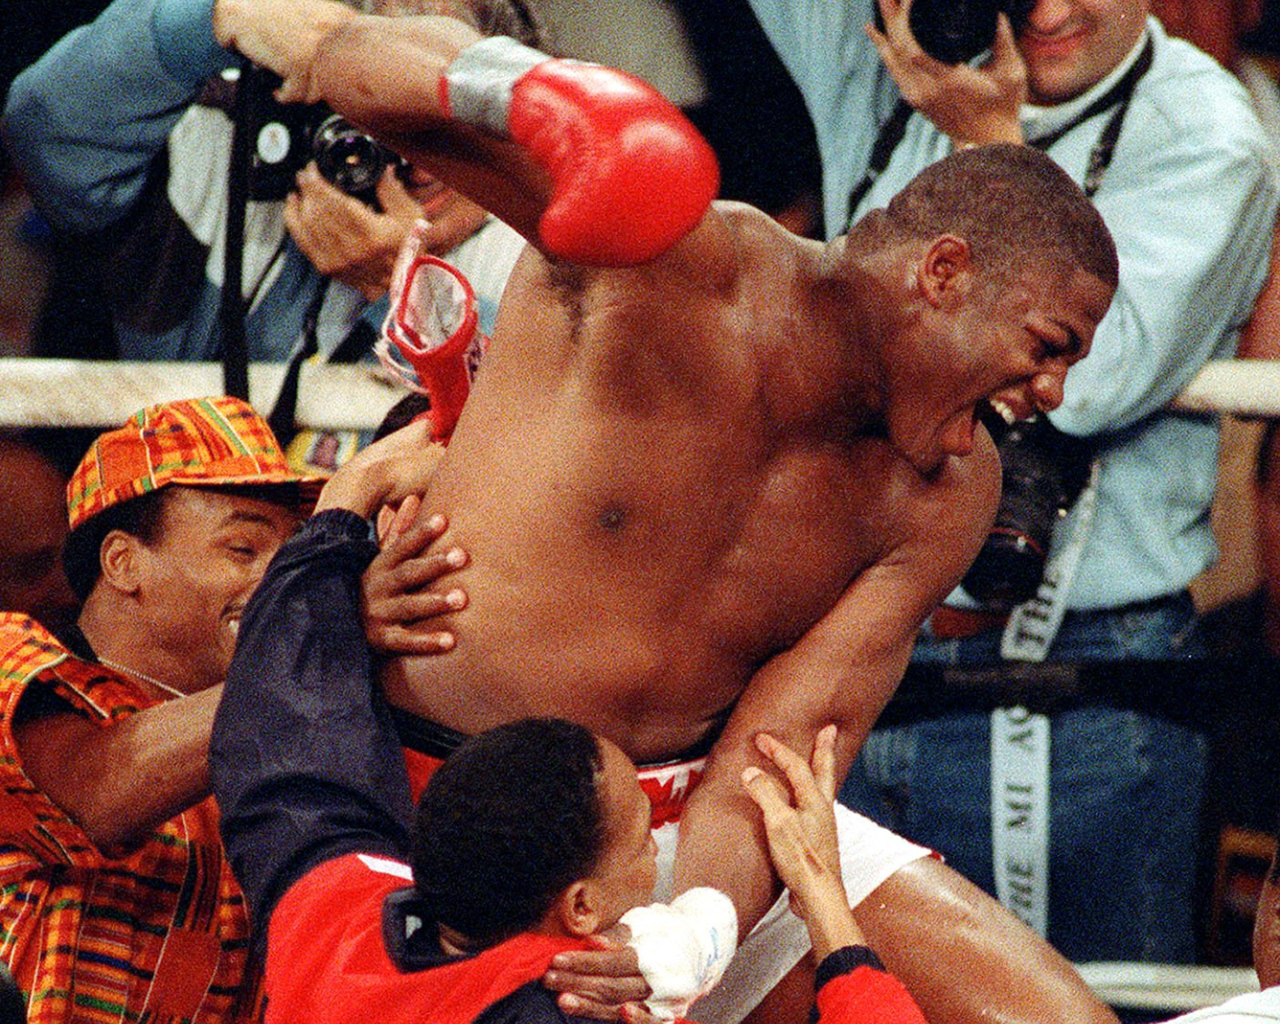 Boxing legend Riddick Bowe rampage